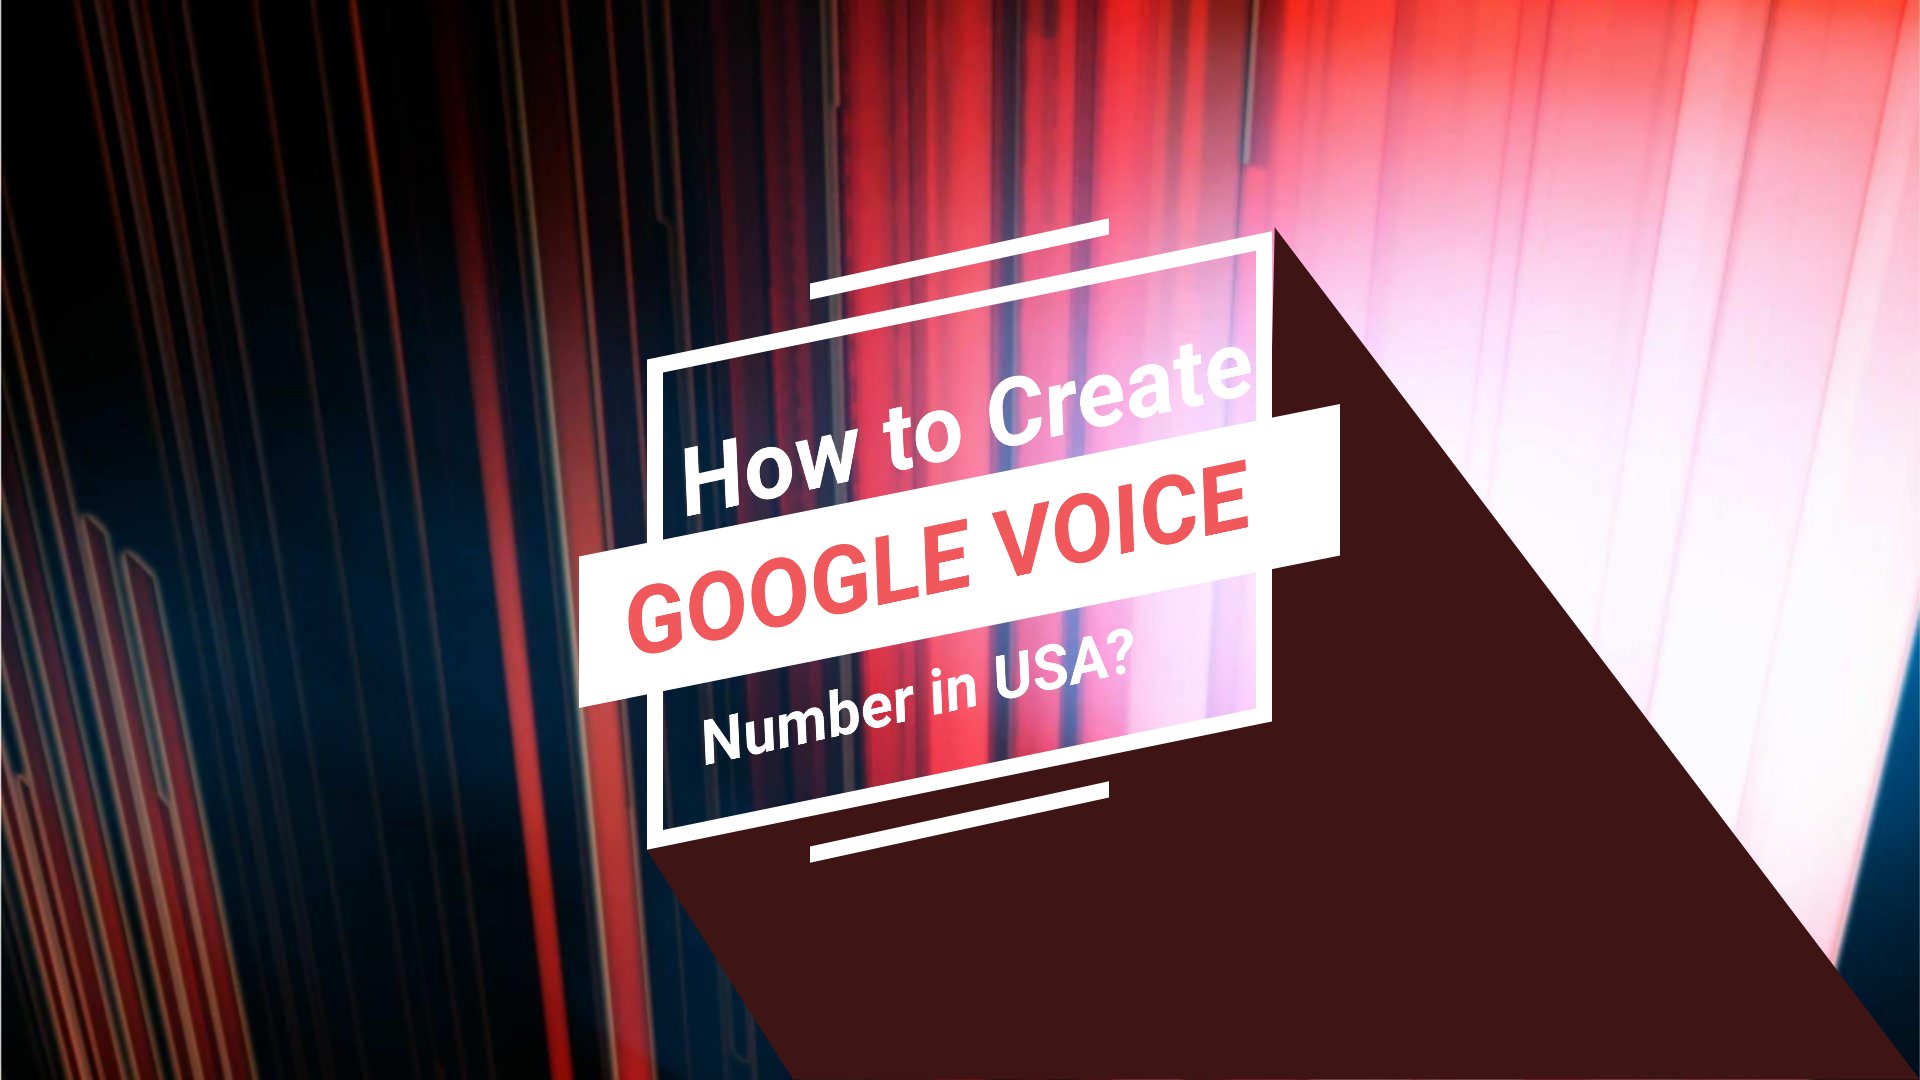 How to Create Google Voice Accounts?